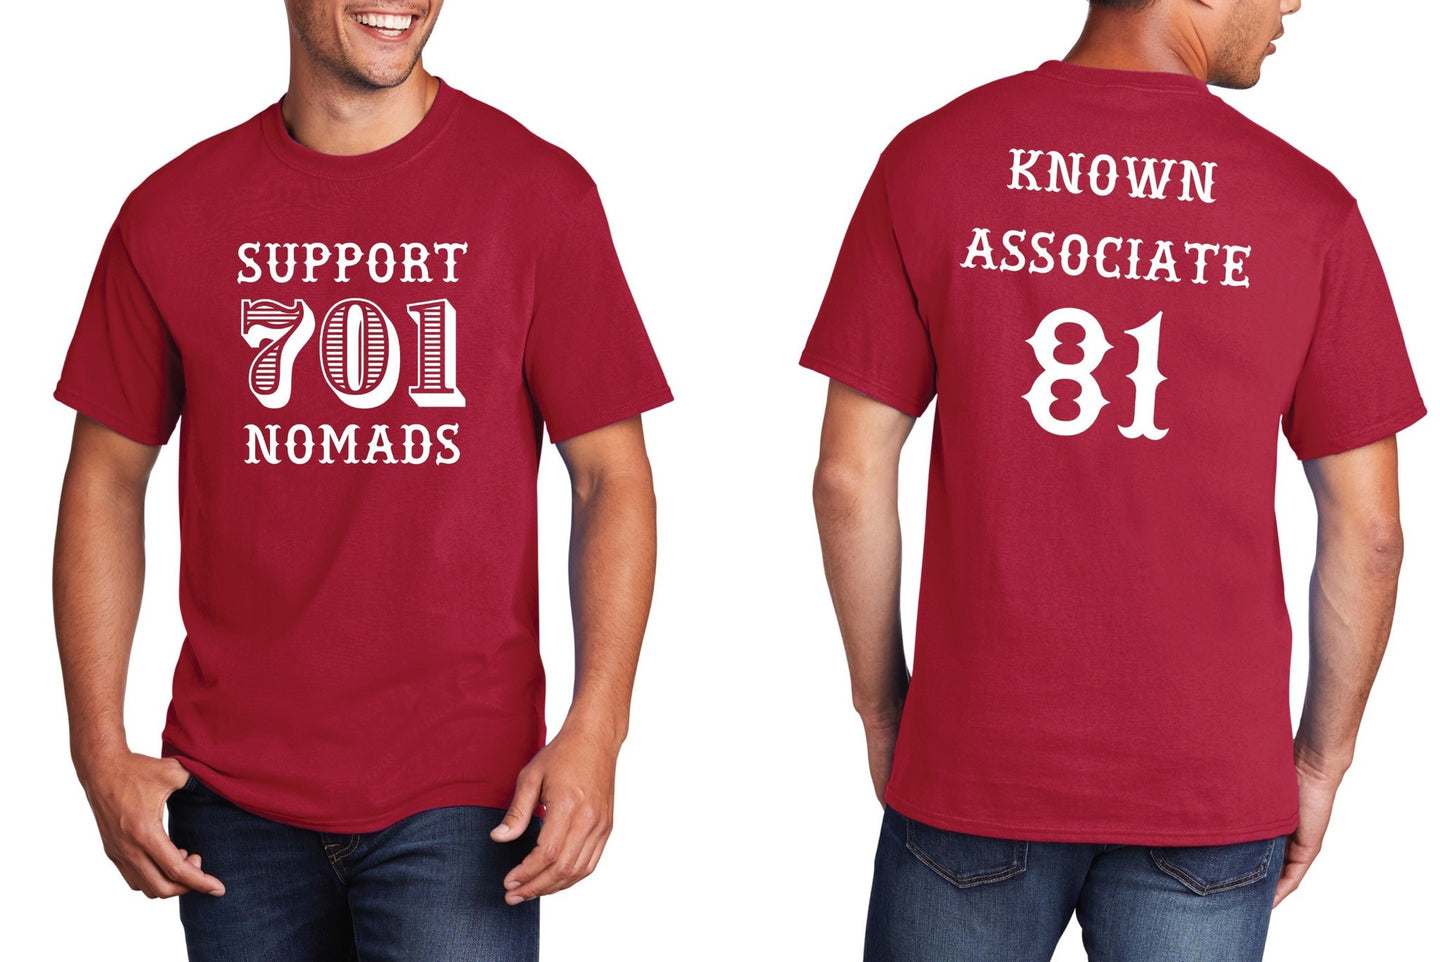 Support 701 Nomads